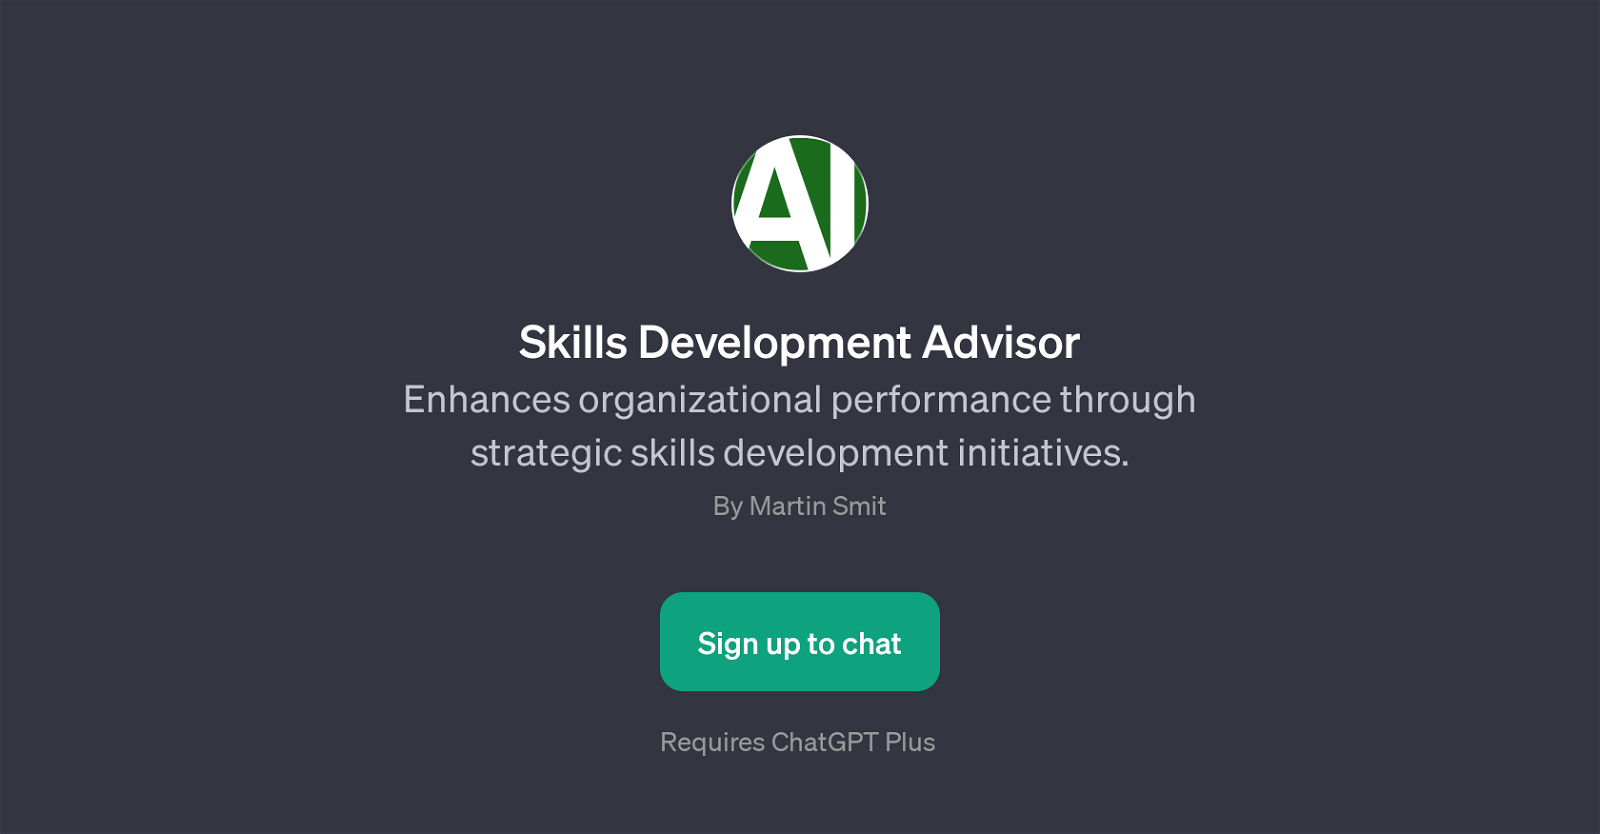 Skills Development Advisor website